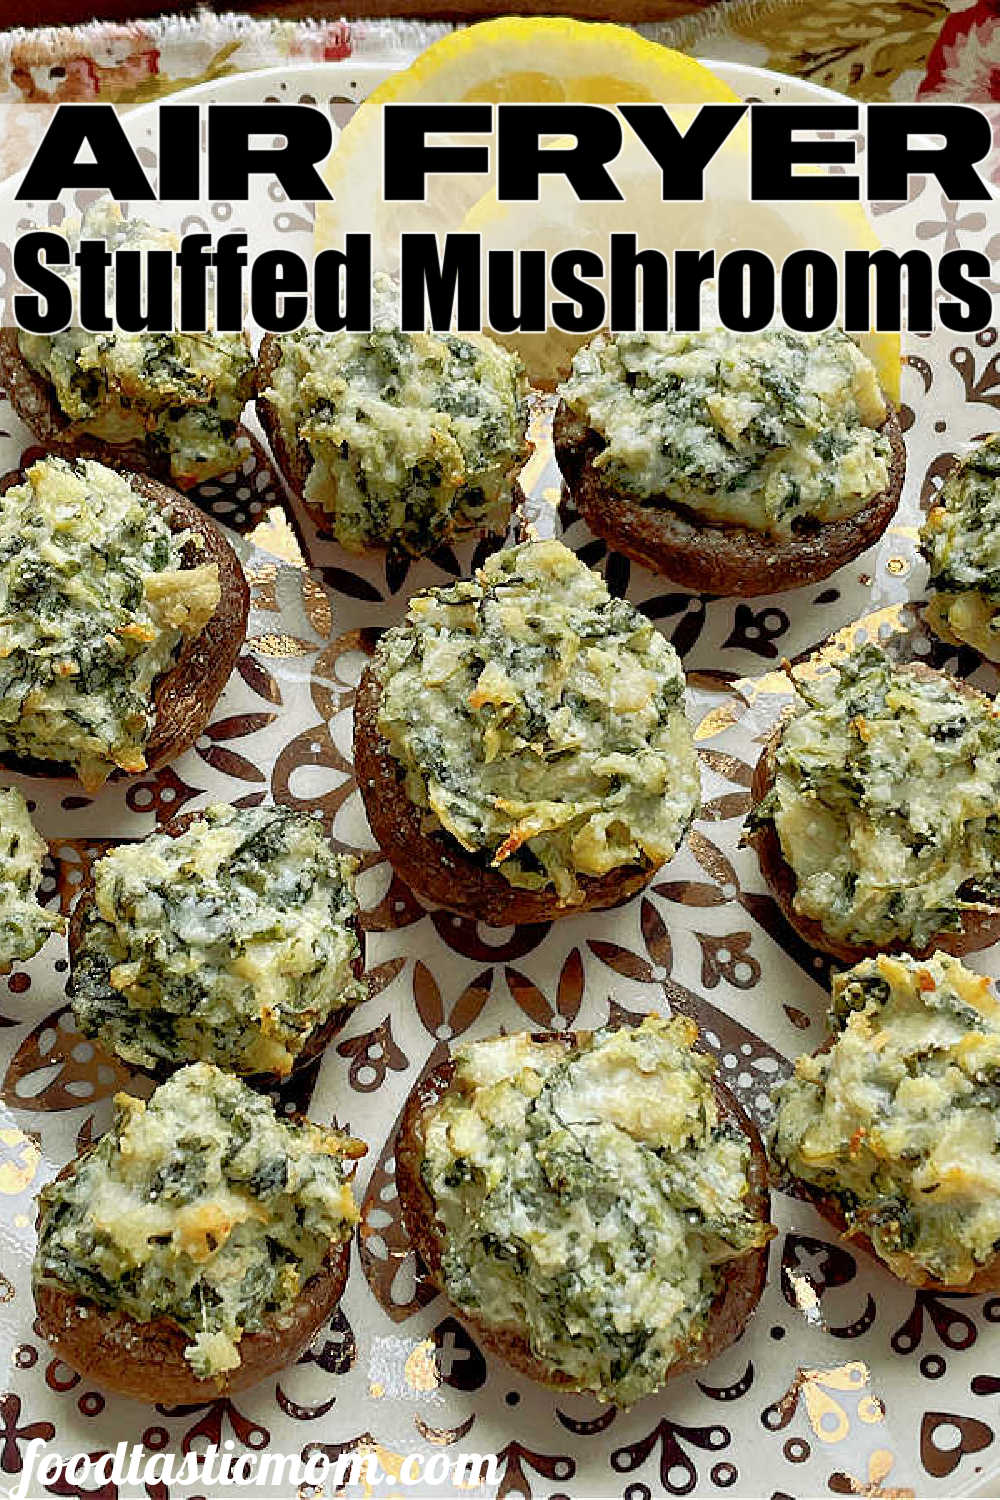 Air Fryer Stuffed Mushrooms | Foodtastic Mom #airfryerrecipes #airfryerstuffedmushrooms #mushroomrecipes #stuffedmushroomseasy via @foodtasticmom